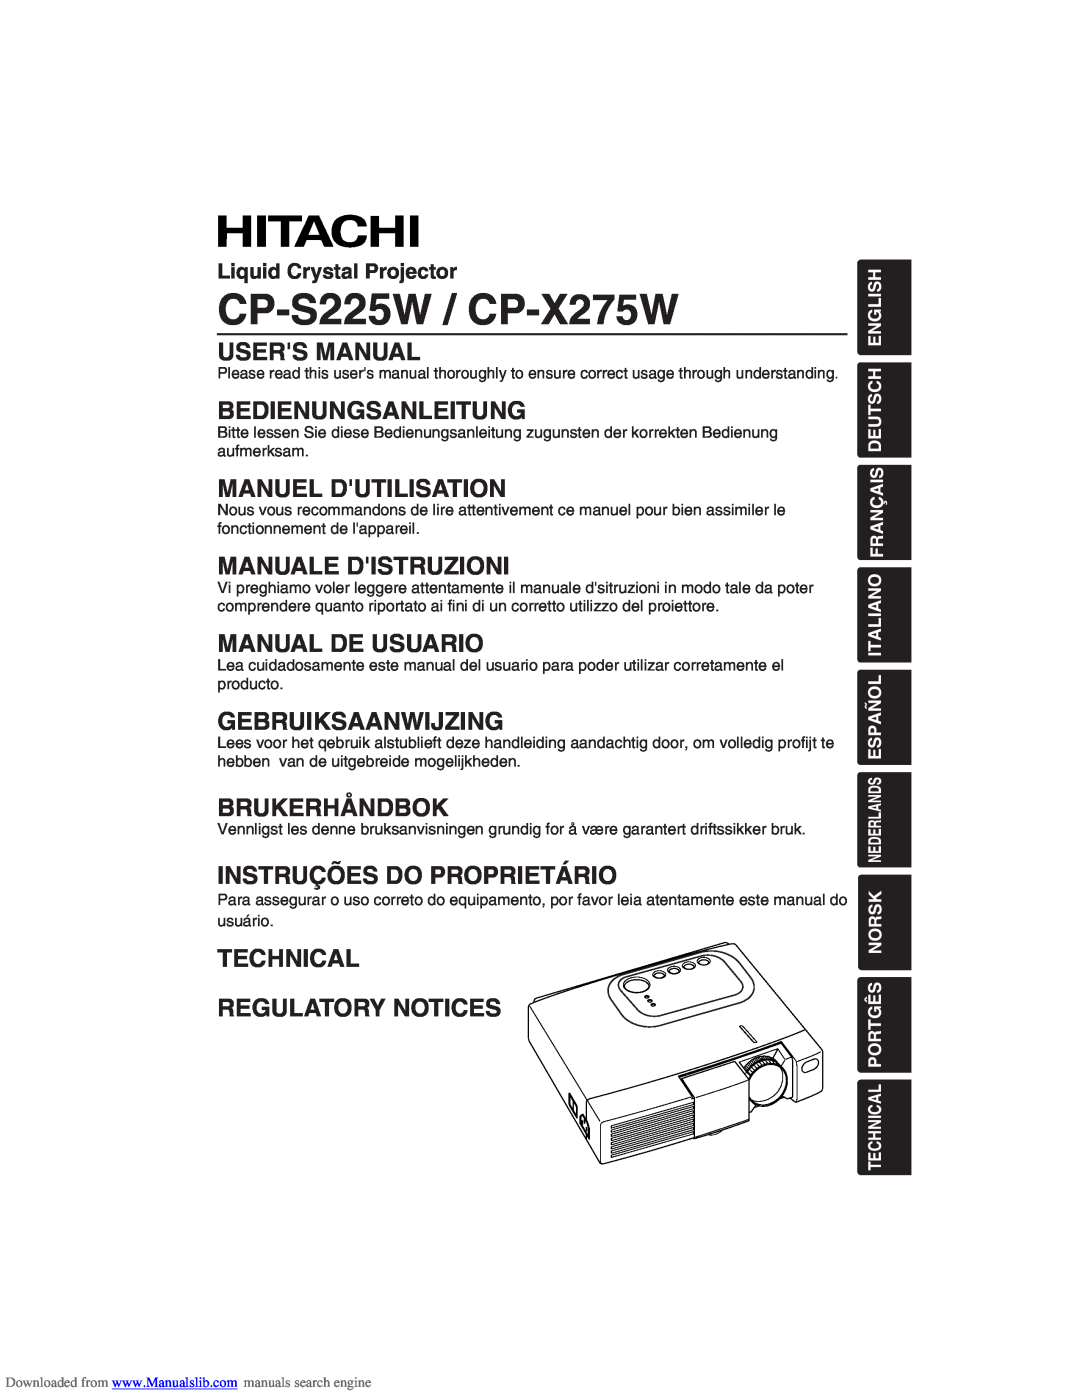 Hitachi CP-X275W user manual Users Manual, Bedienungsanleitung, Manuel Dutilisation, Manuale Distruzioni, Brukerhåndbok 